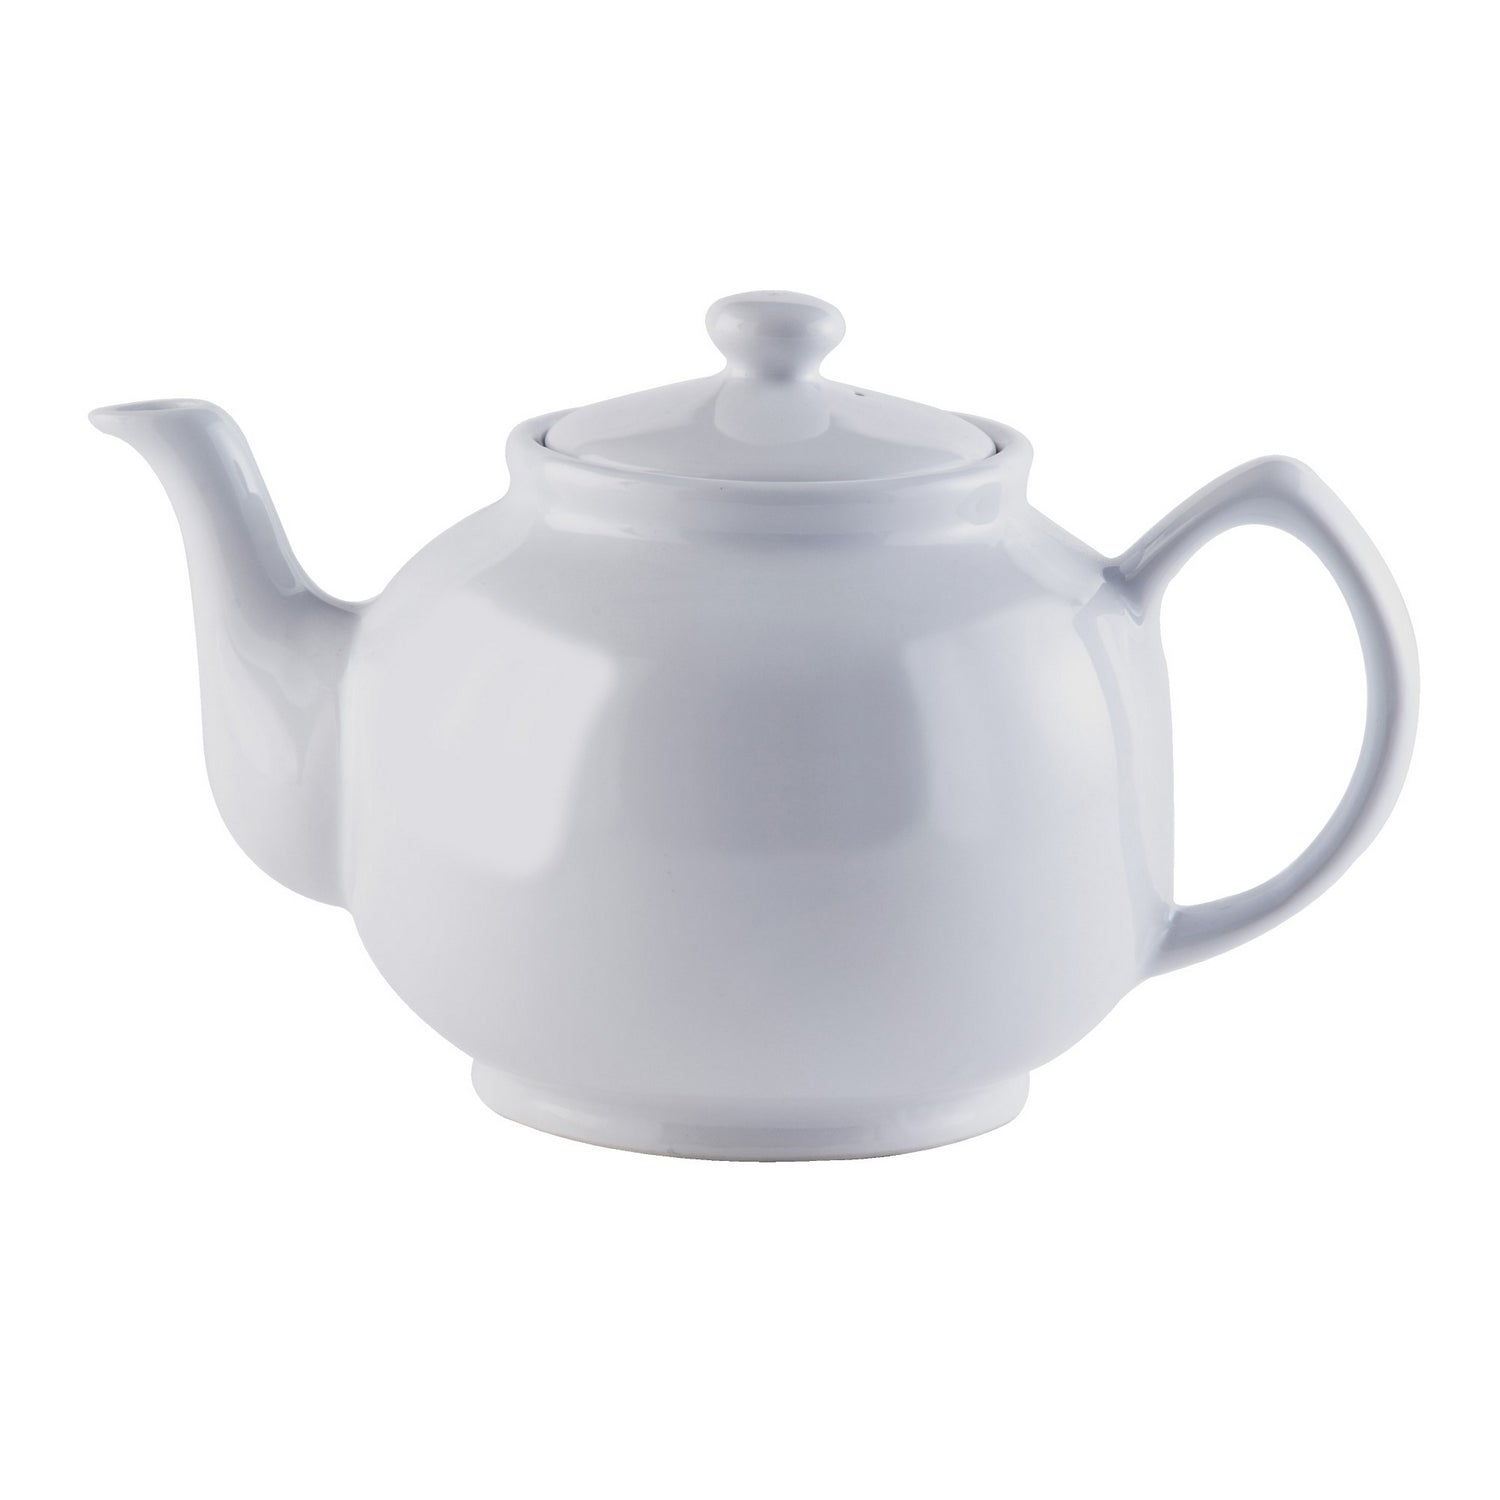 Classic White Porcelain 10 Cup Teapot Pottery